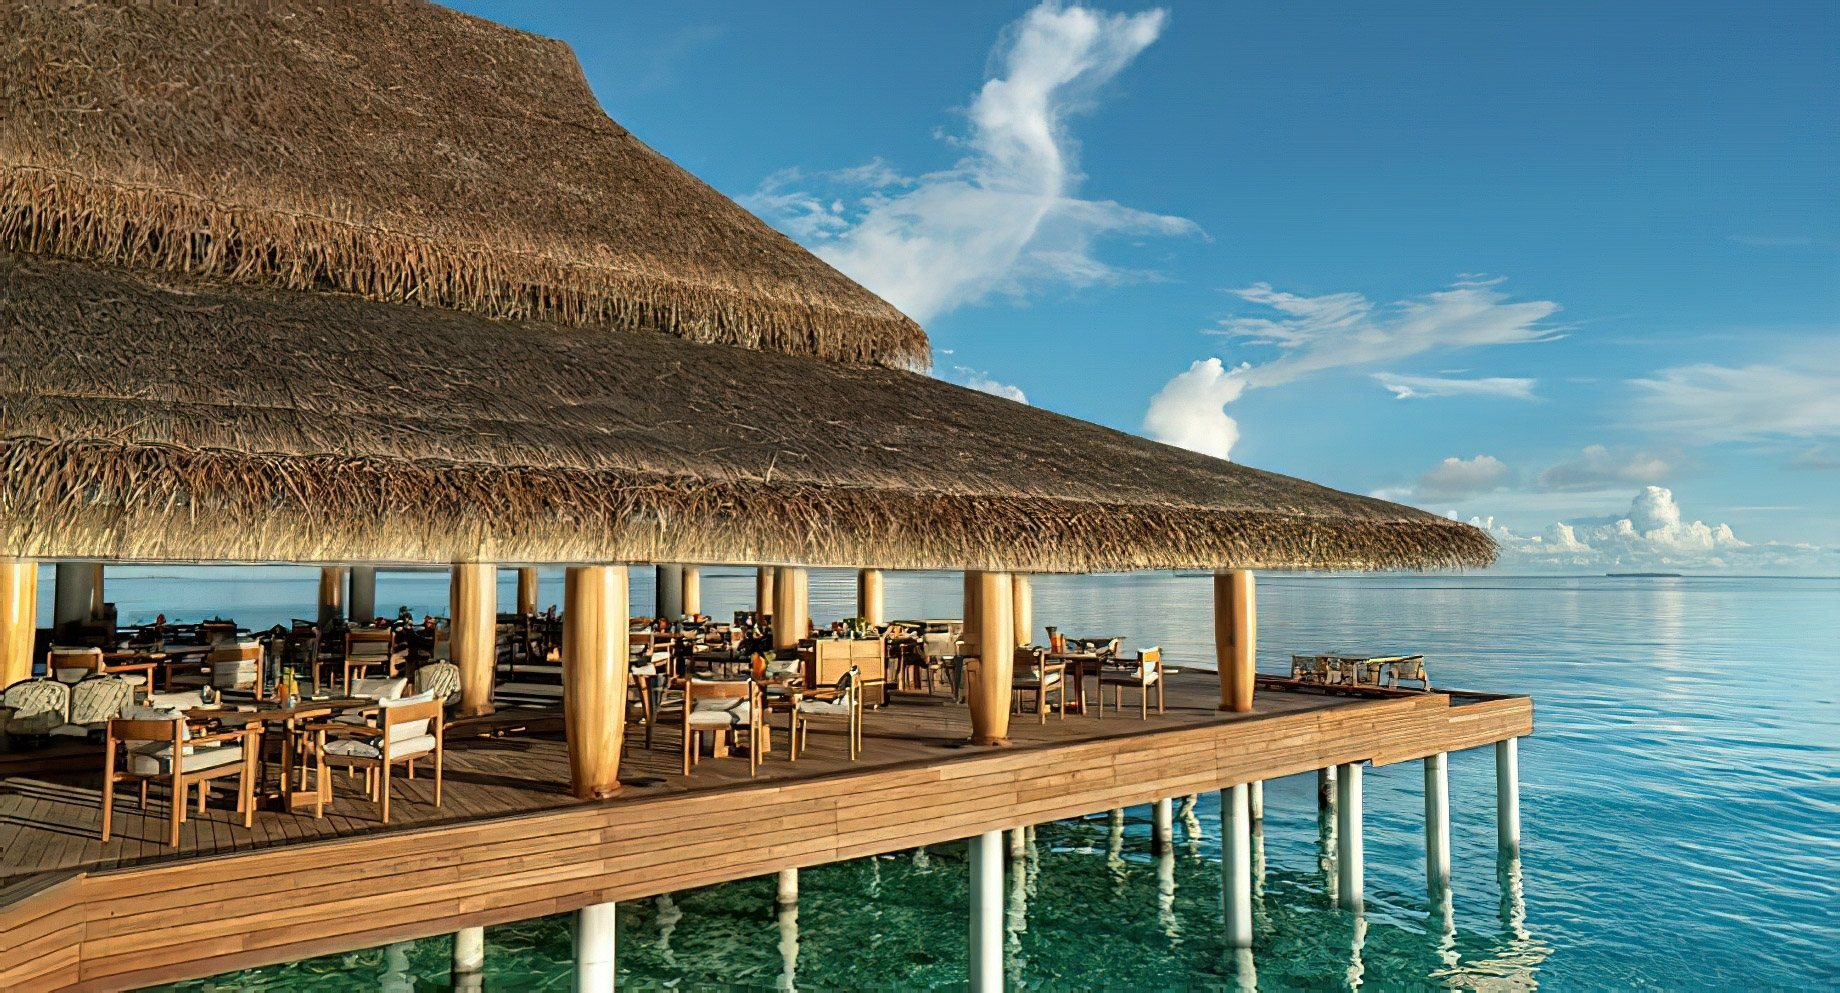 Anantara Kihavah Maldives Villas Resort – Baa Atoll, Maldives – SPICE Restaurant Deck Ocean View